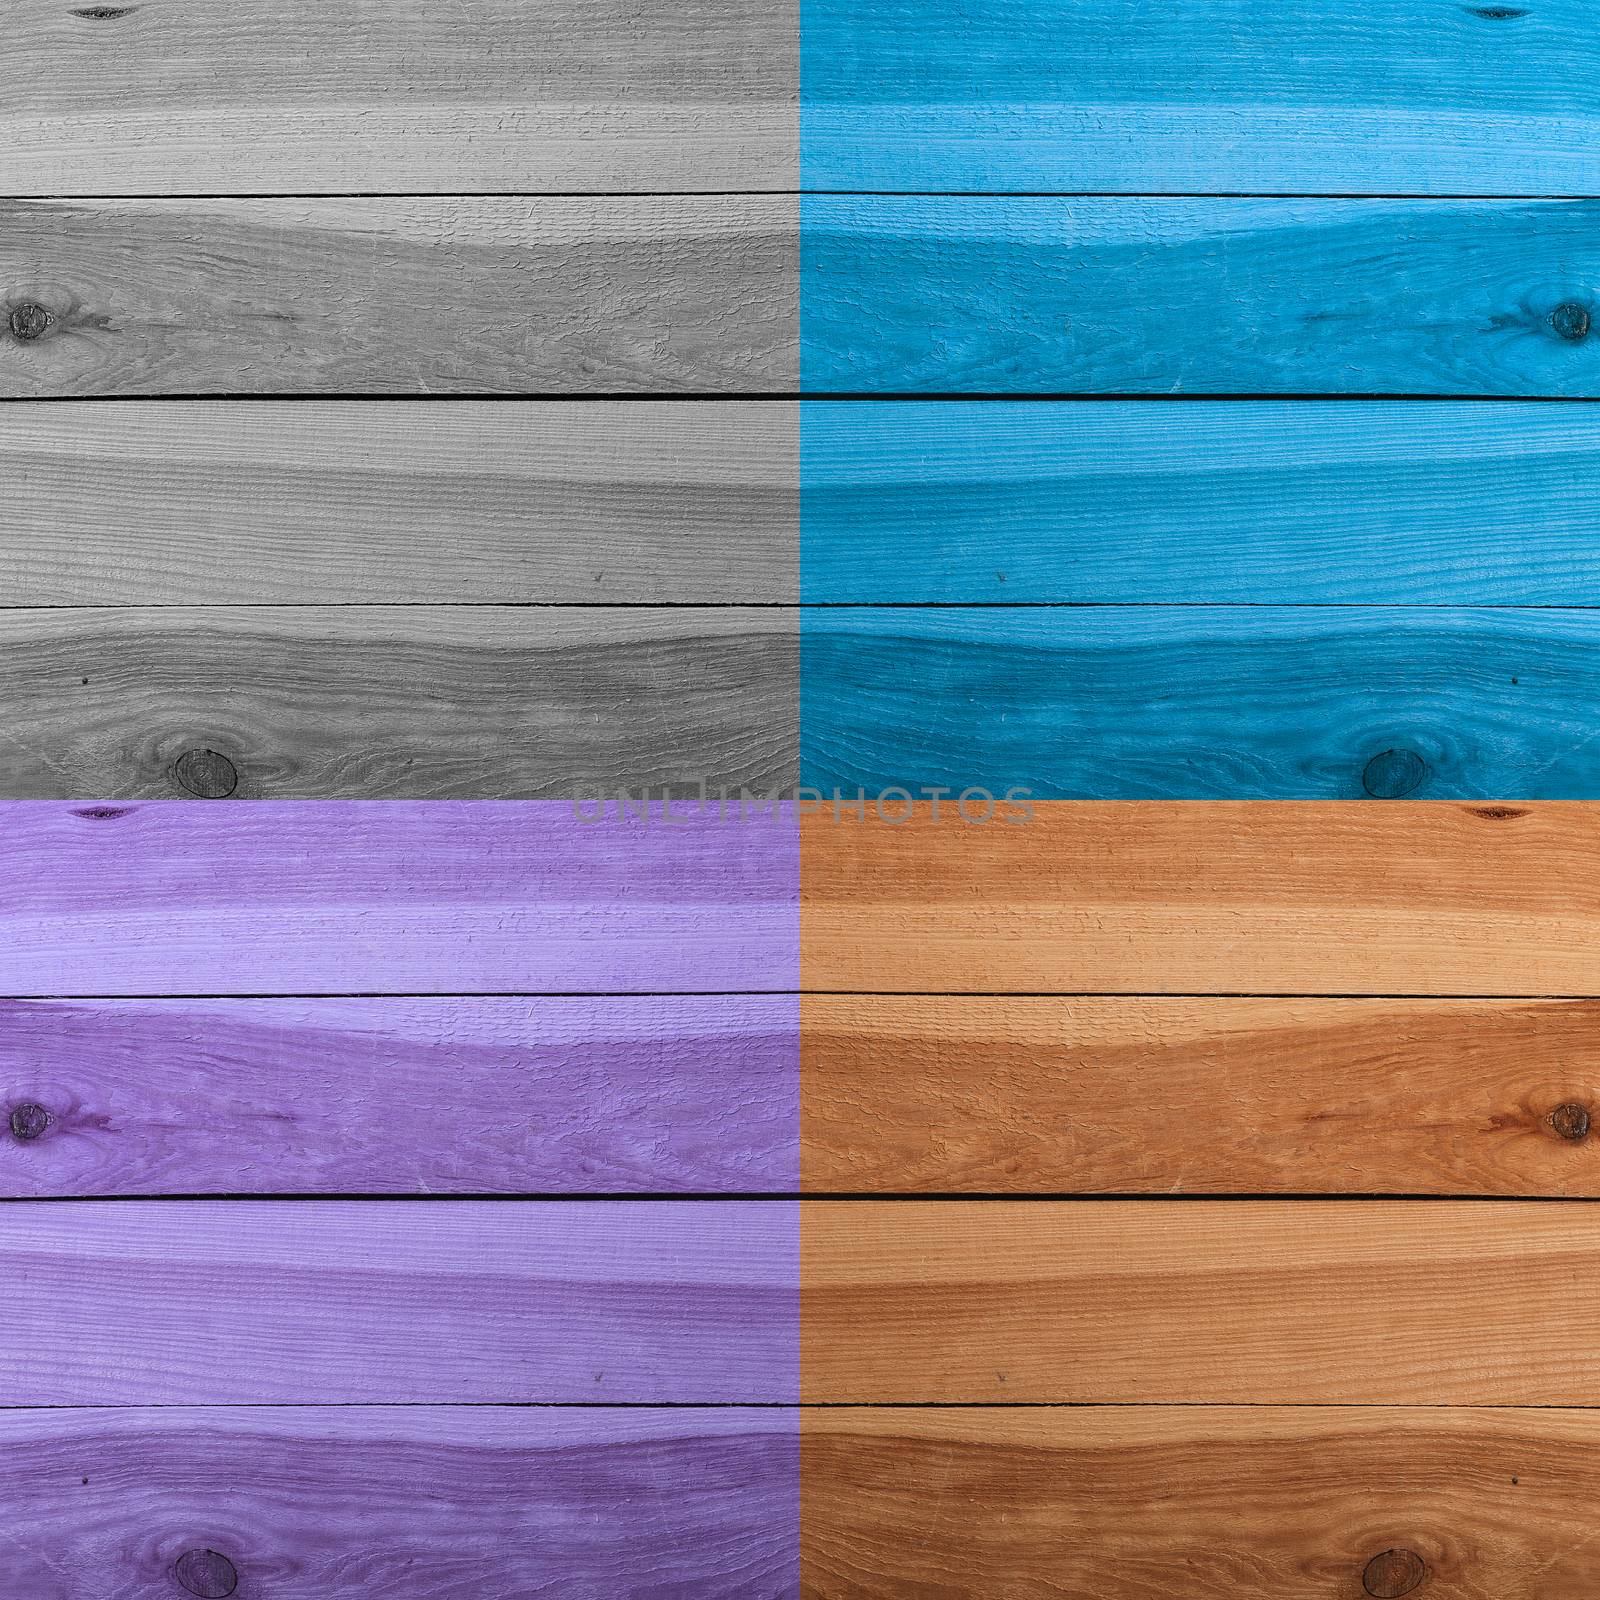 Grunge plank wood texture background. Collage of wooden surfaces by natazhekova